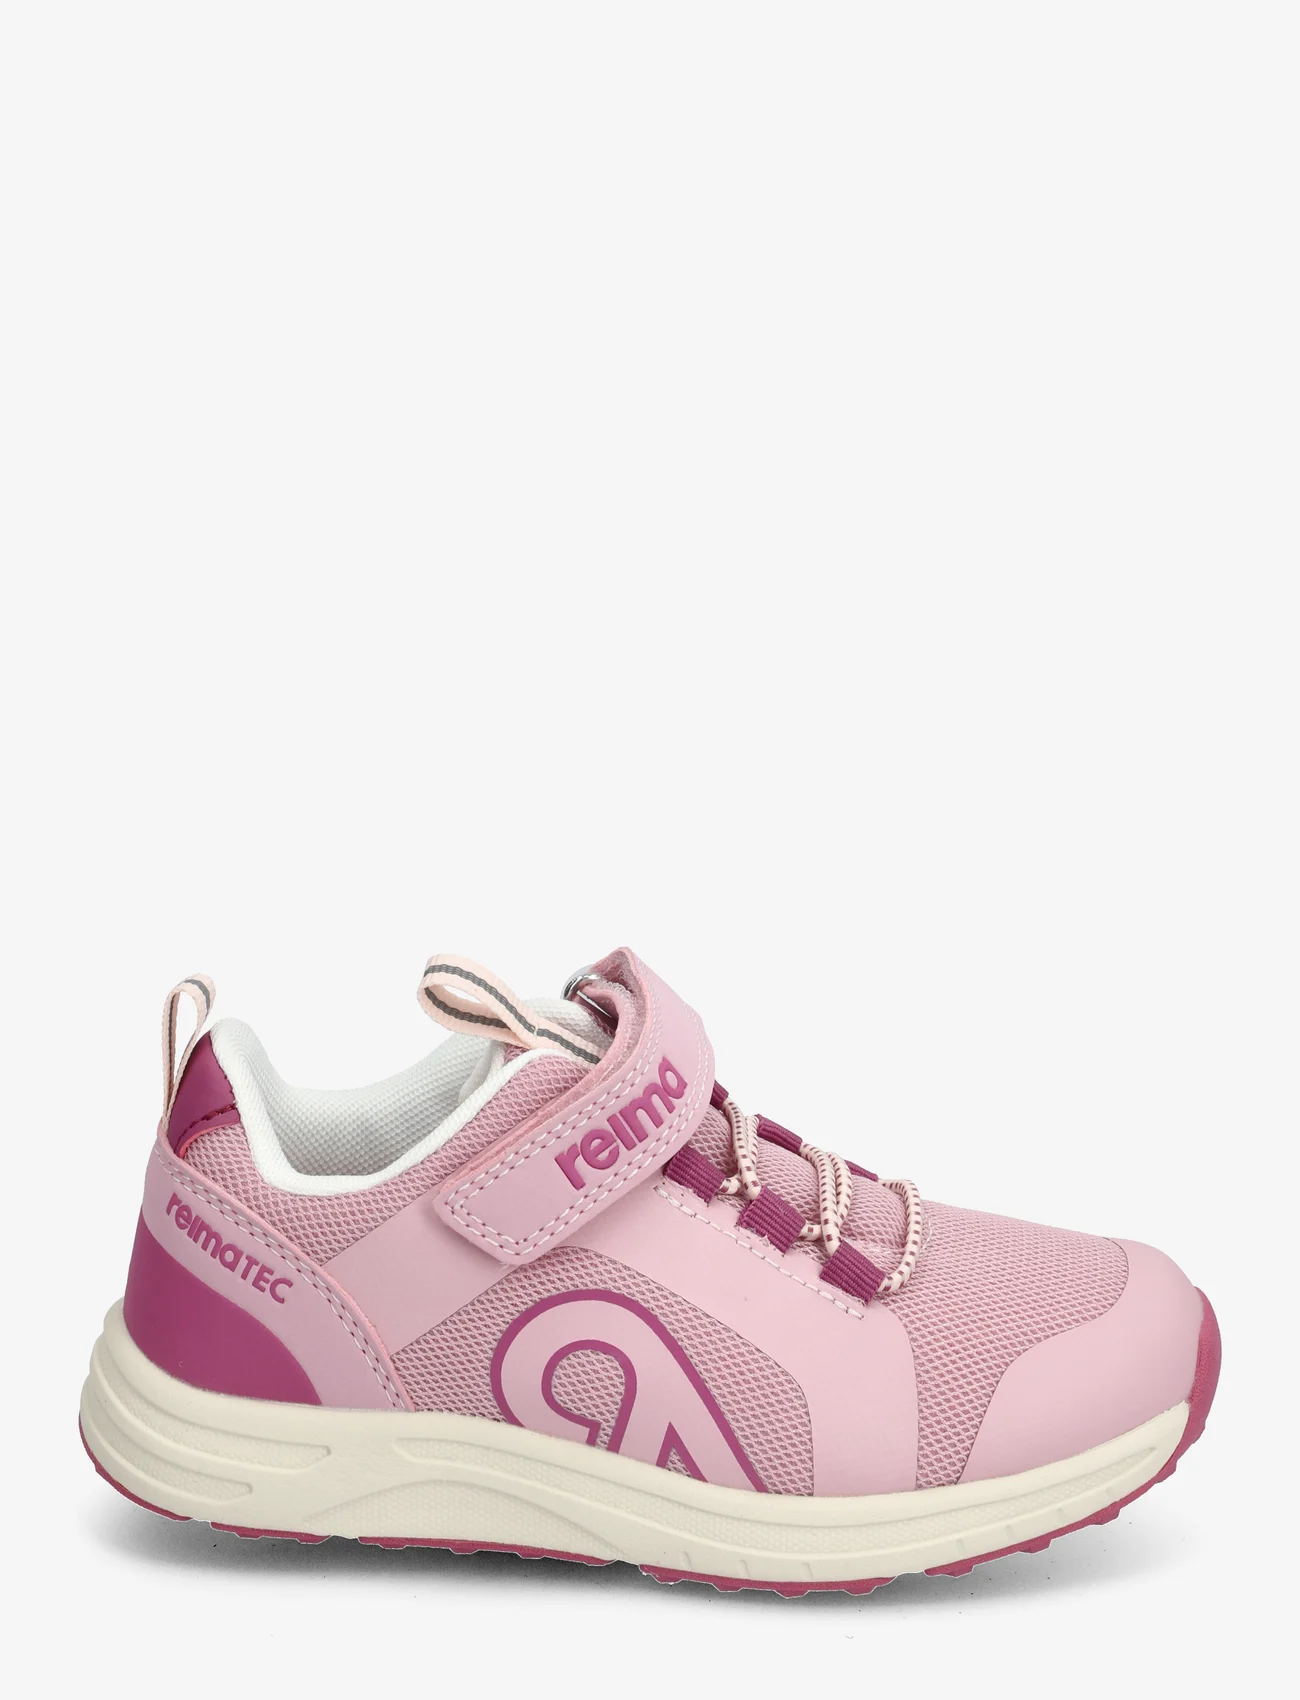 Reima - Reimatec shoes, Enkka - dzieci - grey pink - 1